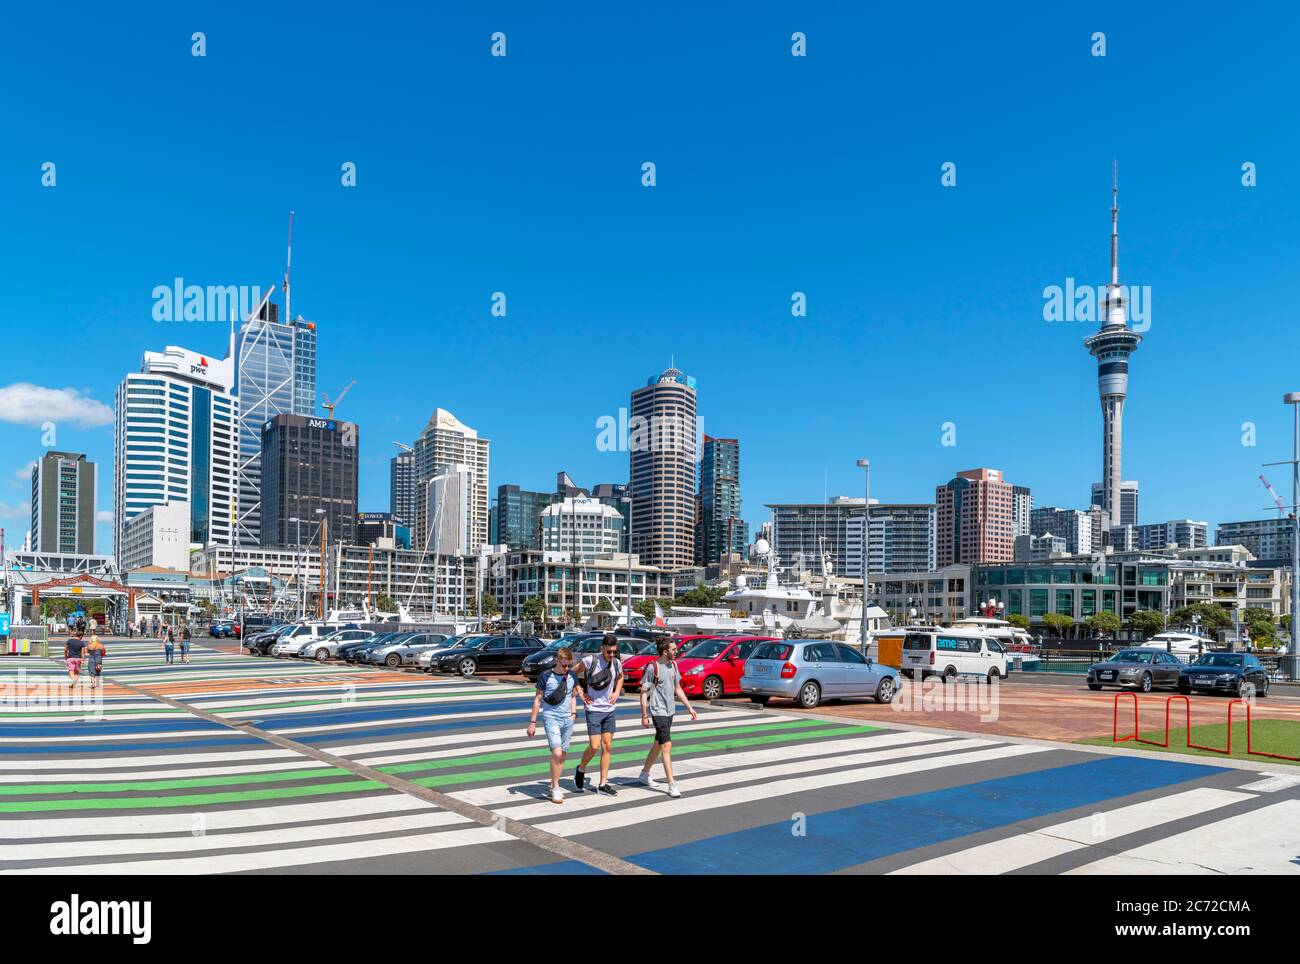 Skyline del quartiere Centrale degli Affari dal quartiere Wynard, Viaduct Harbour, Auckland, Nuova Zelanda Foto Stock